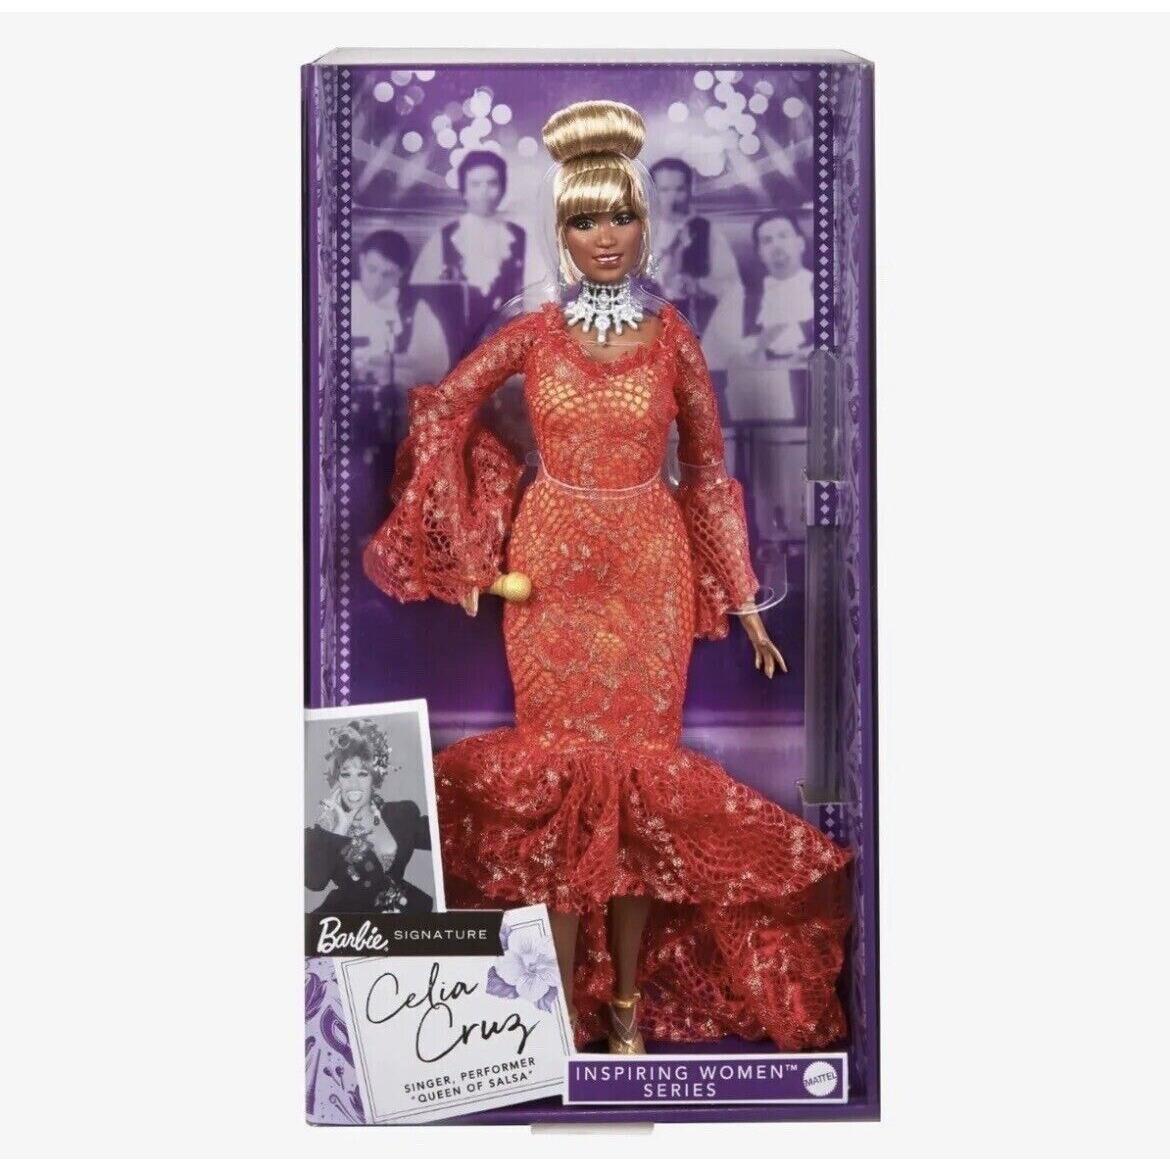 Barbie Queen of Salsa Celia Cruz In Red Lace Dress Ships Today